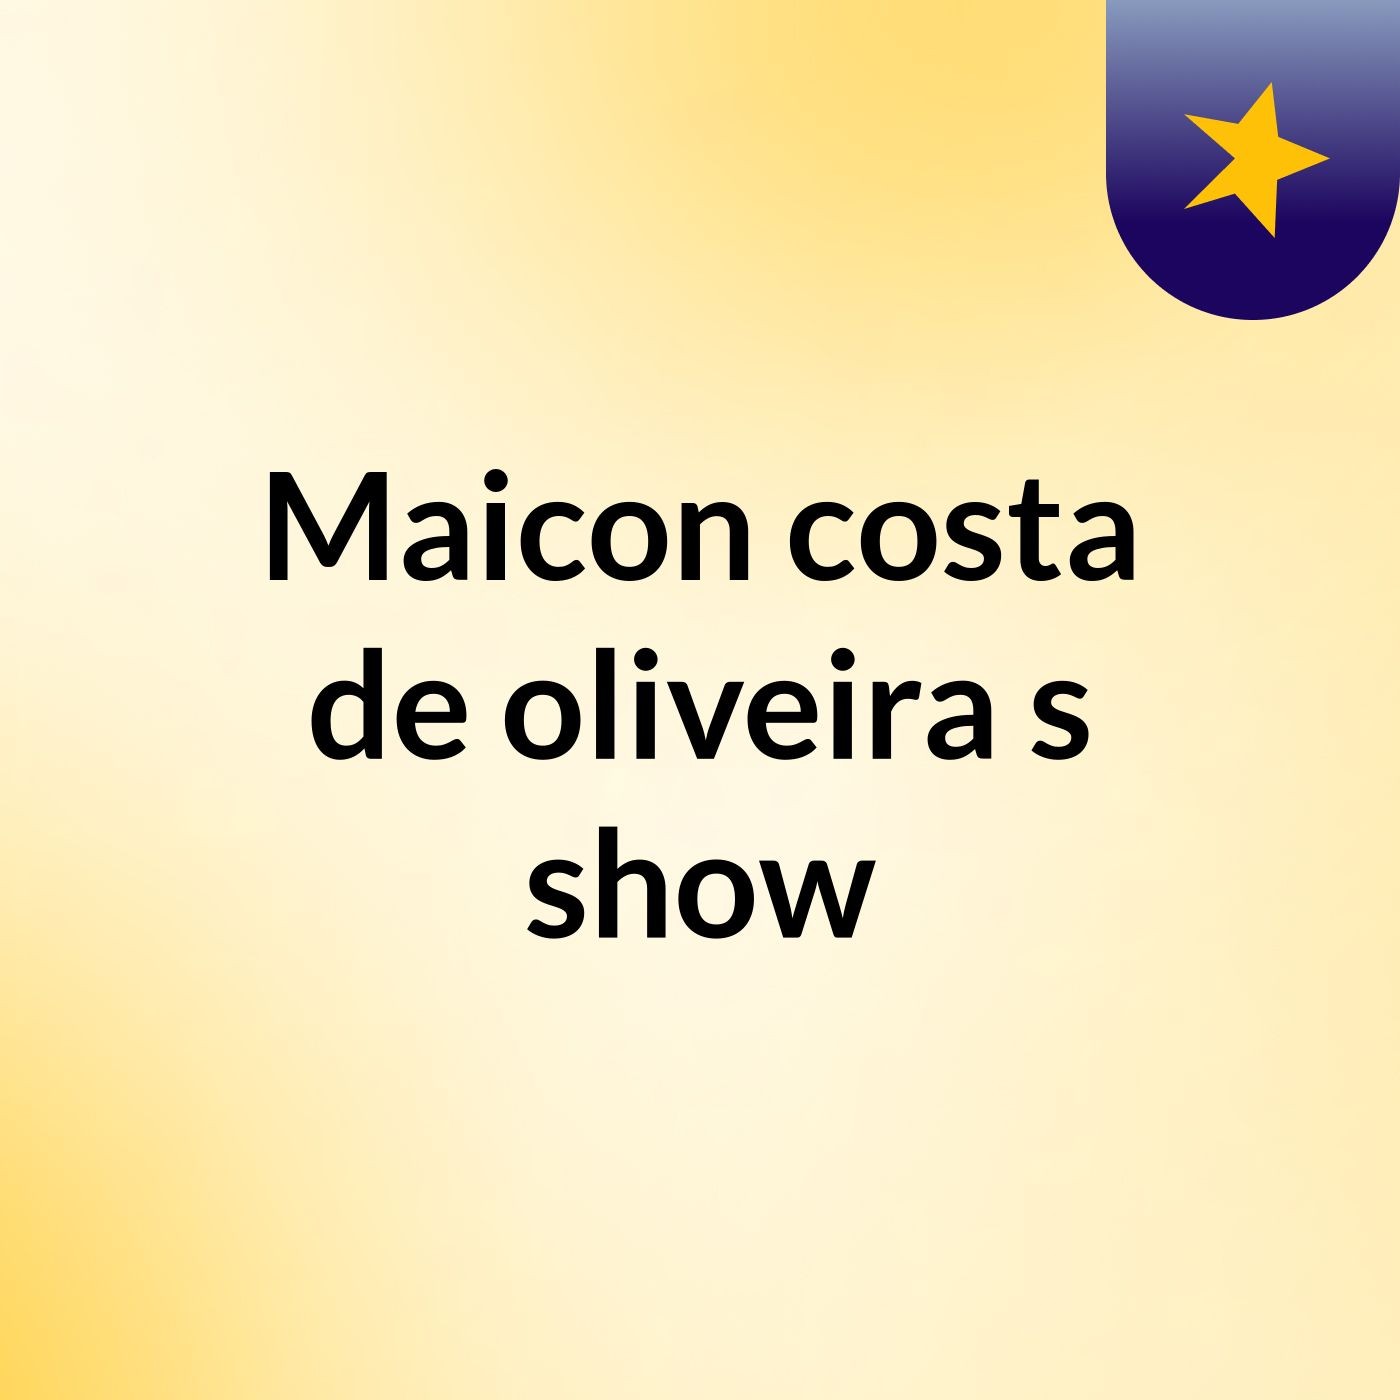 Maicon costa de oliveira's show